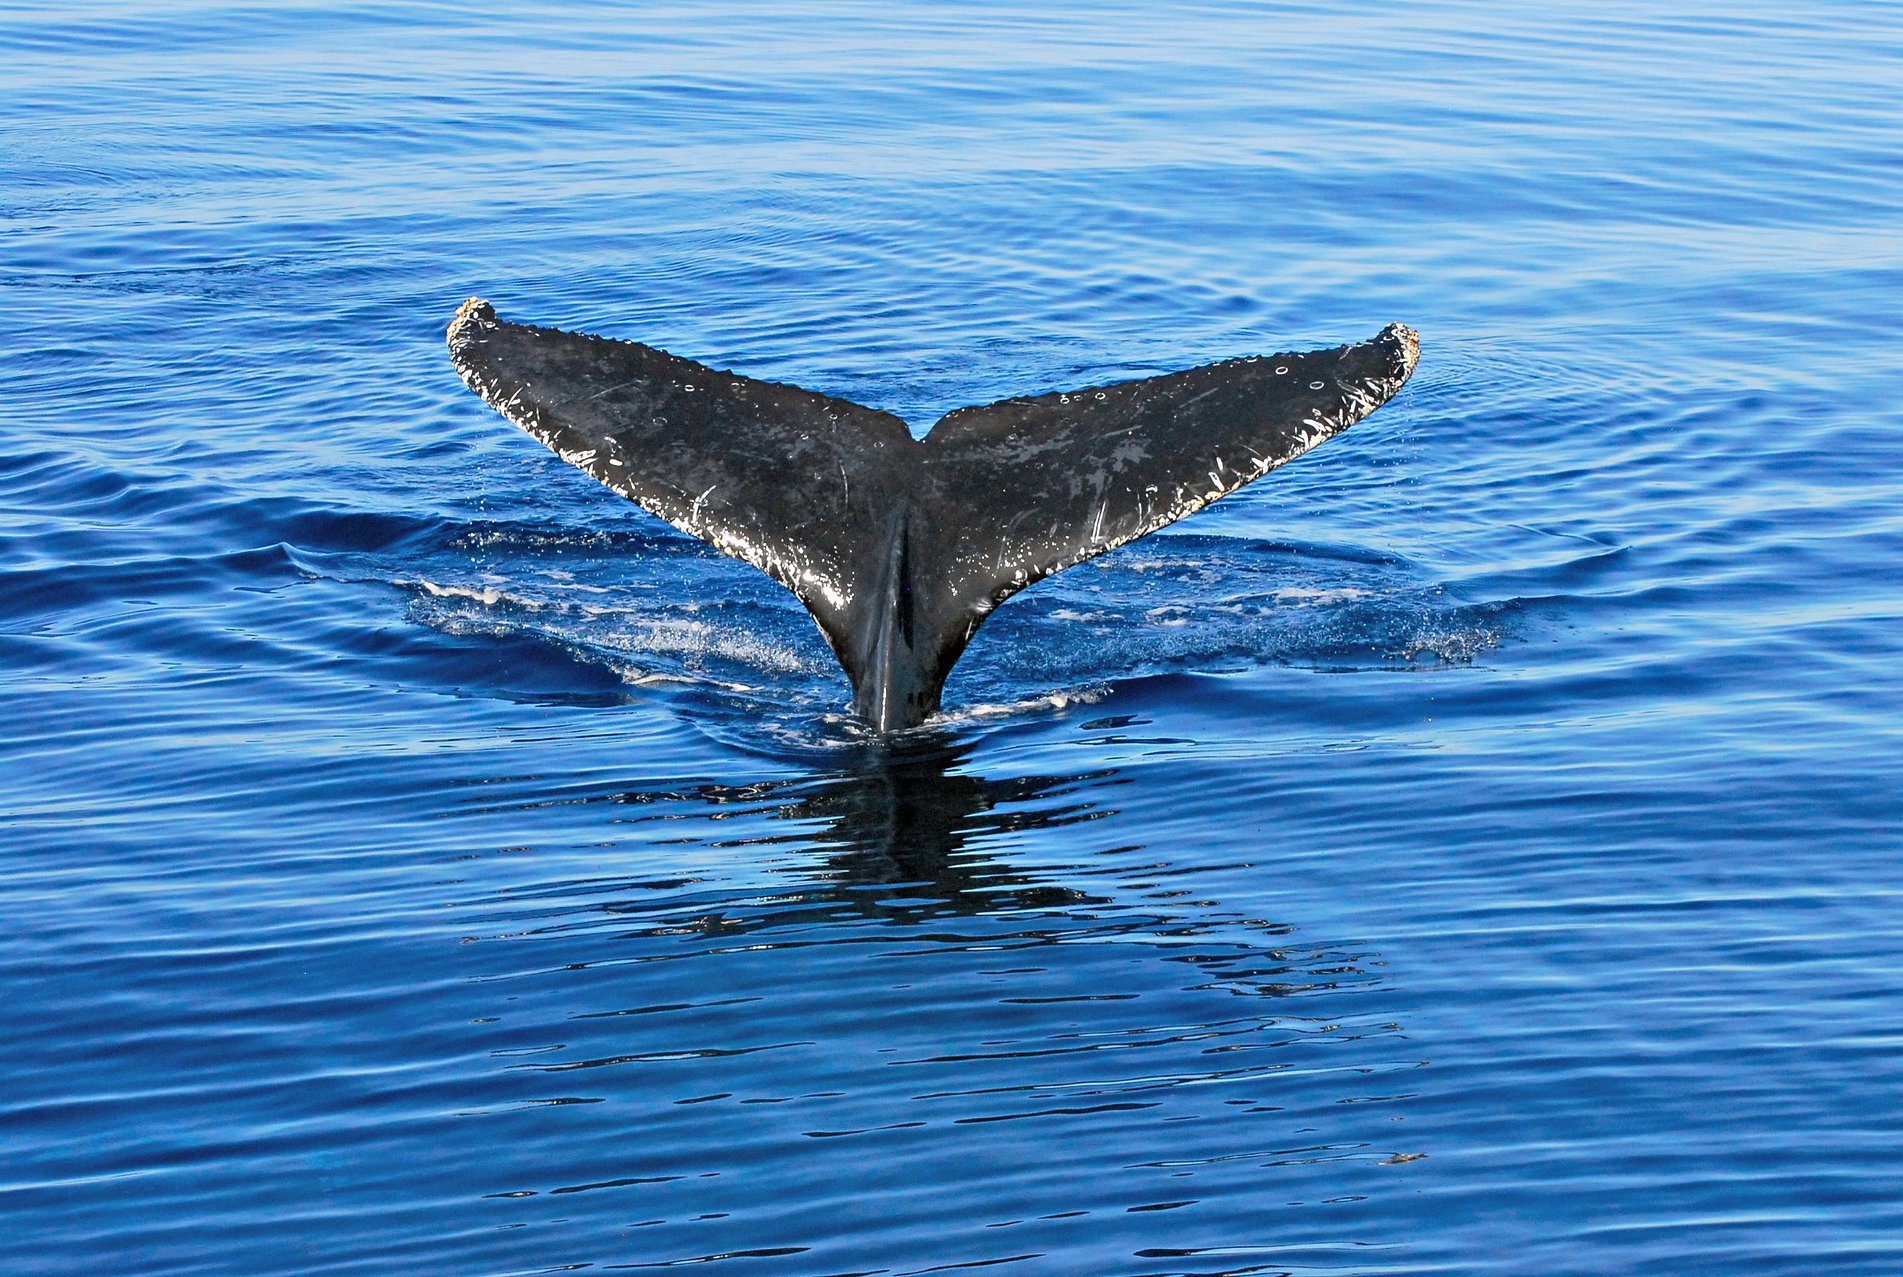 Whale Watch Western Australia